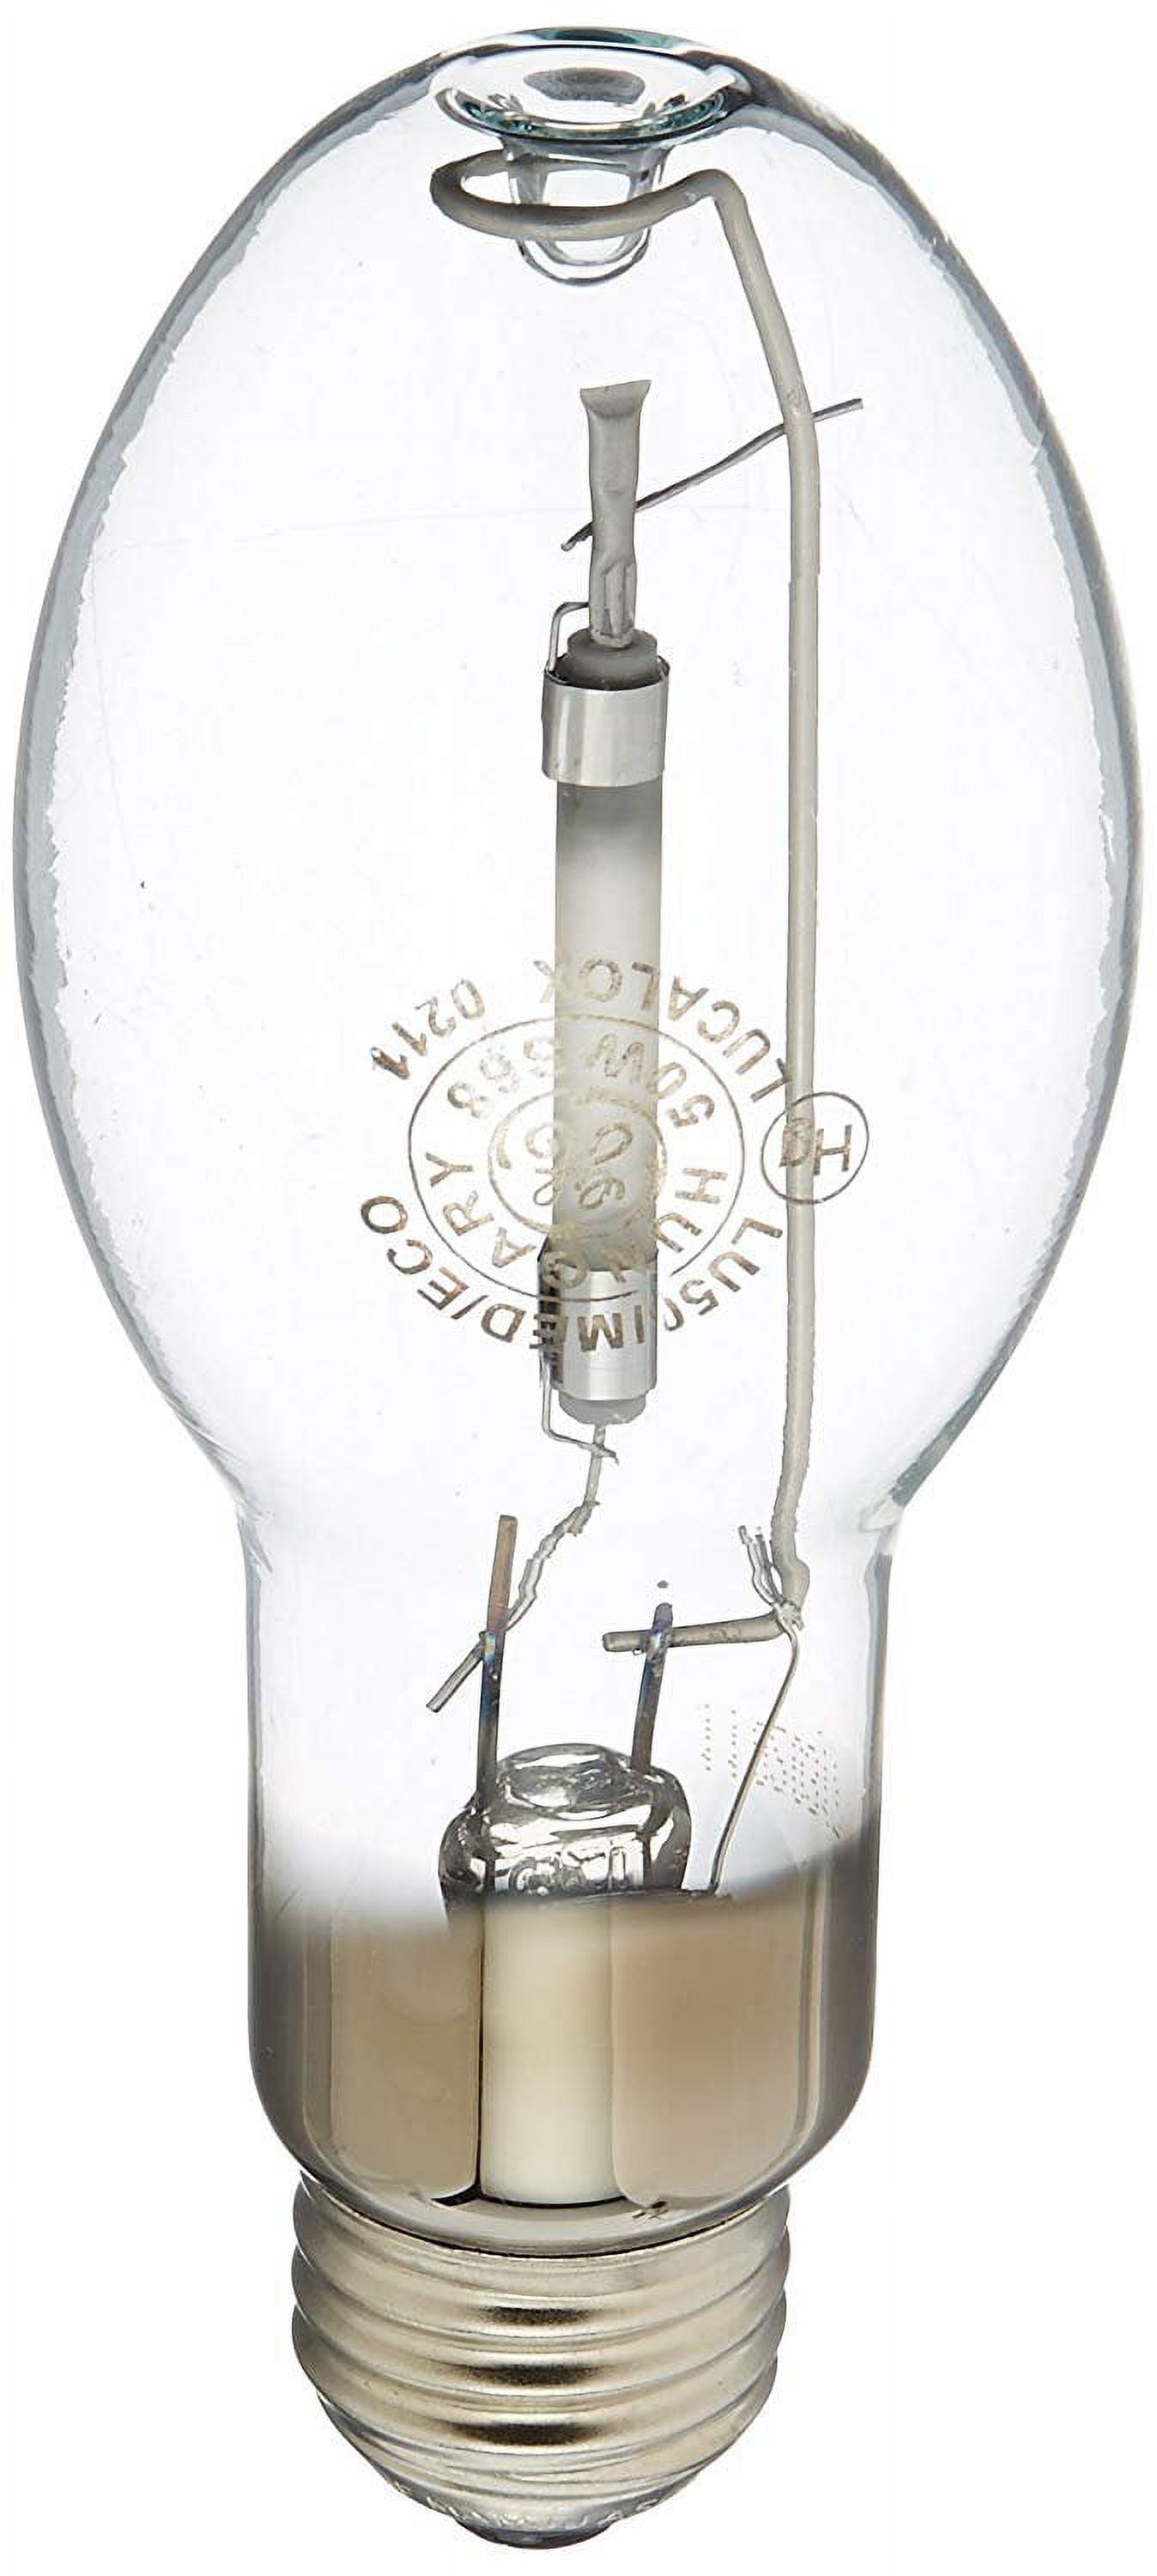 GE Lighting 26421 50-Watt LUCALOX HID High Pressure Sodium Medium Base Light Bulb, 1-Pack - image 1 of 2